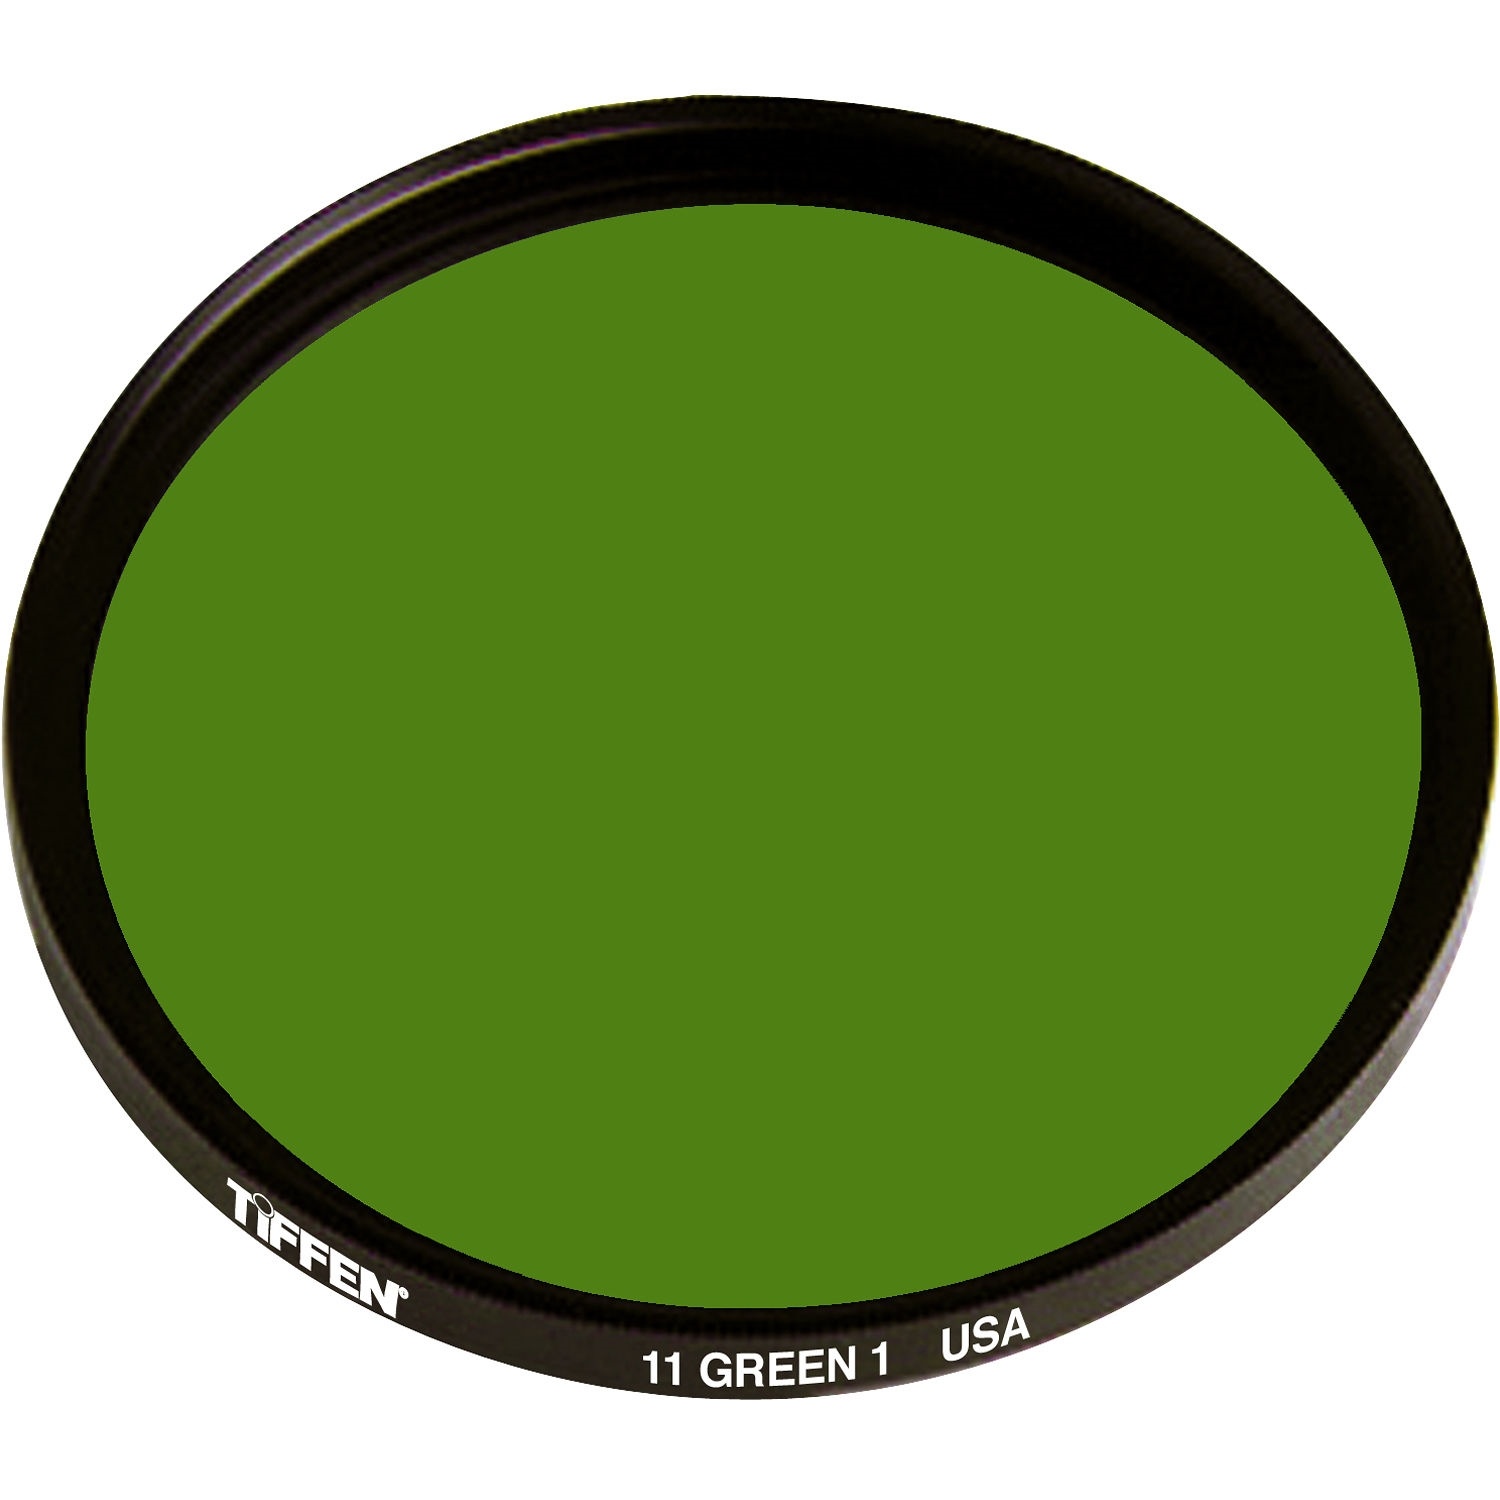 Tiffen 11 Green (1) Filter (43mm)